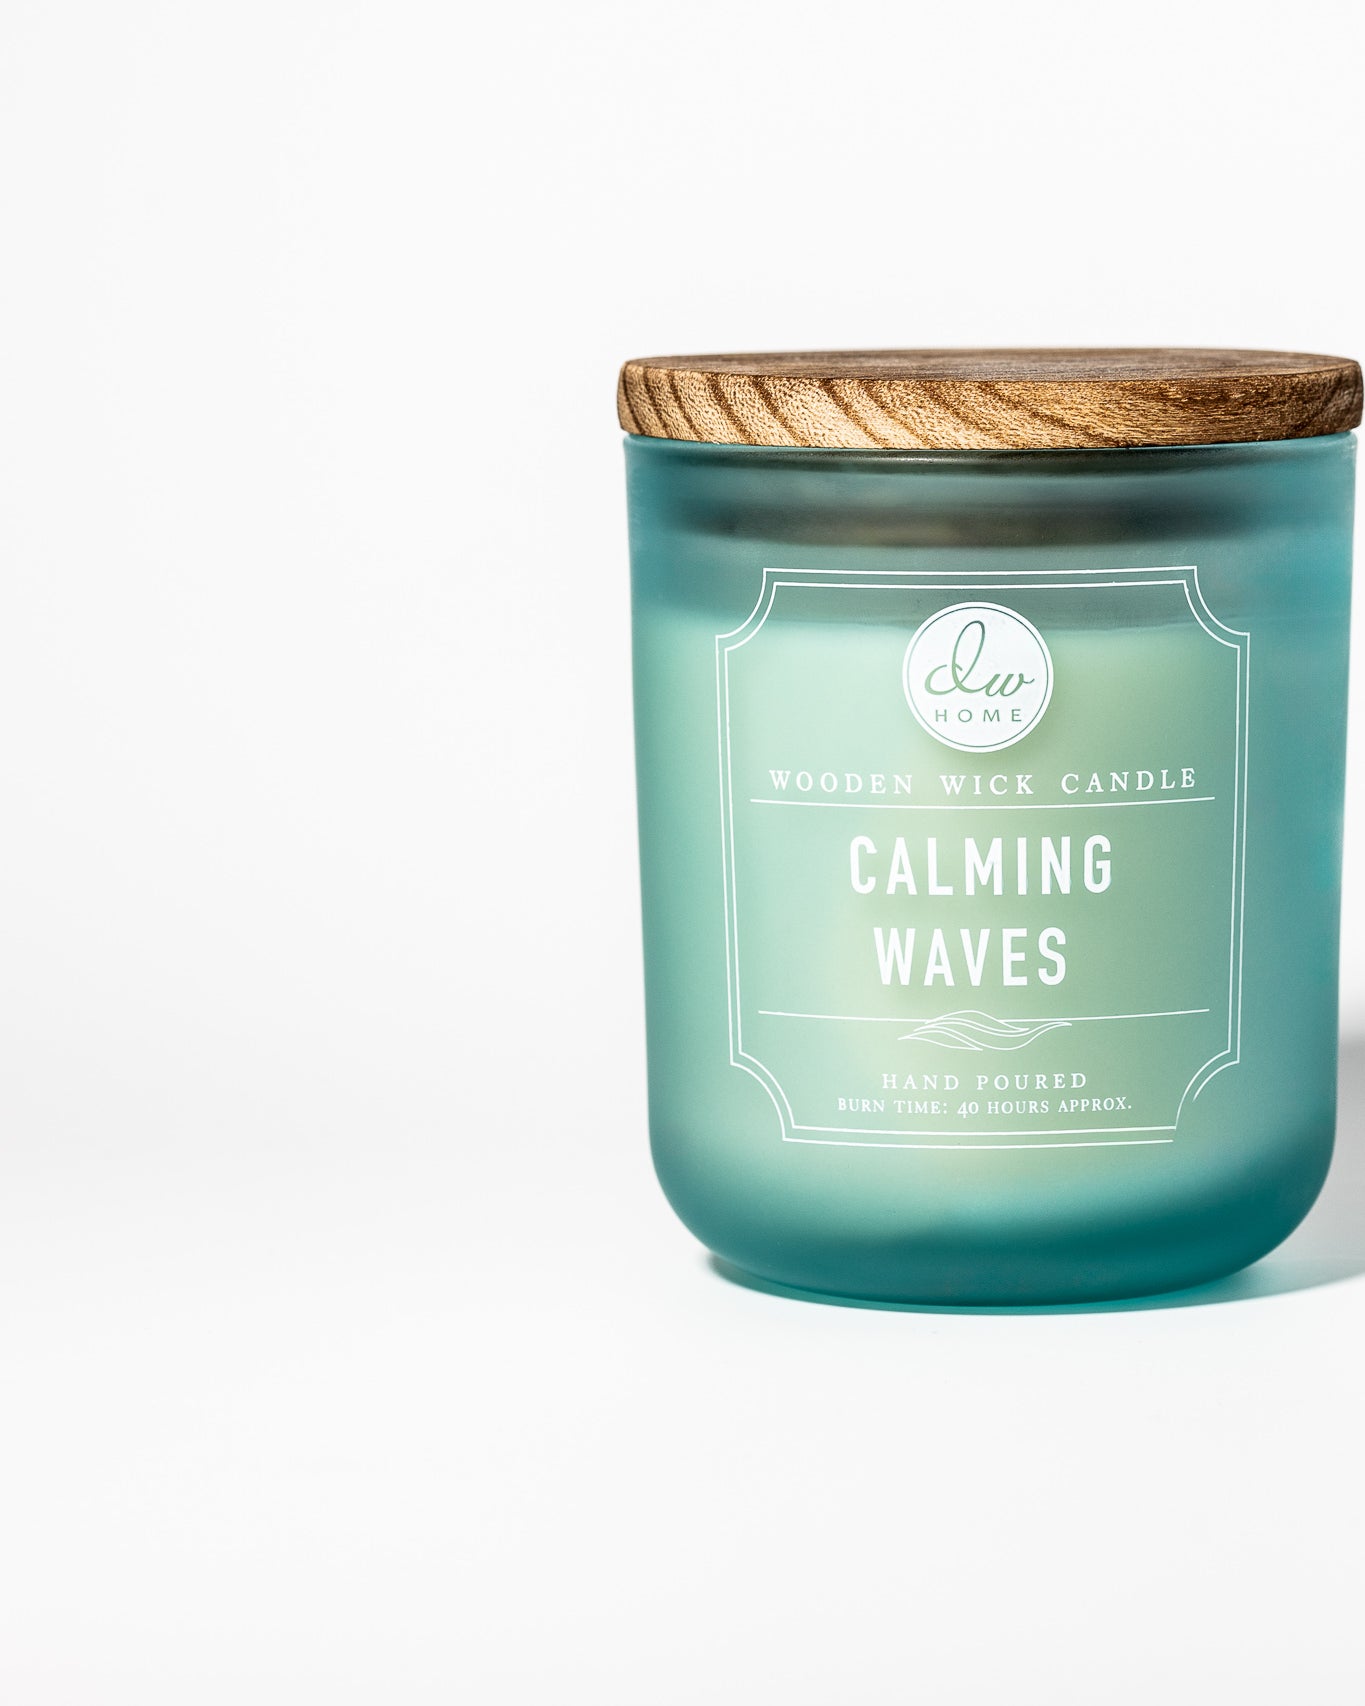 DW Home Calming Waves Wooden Wick žvakė